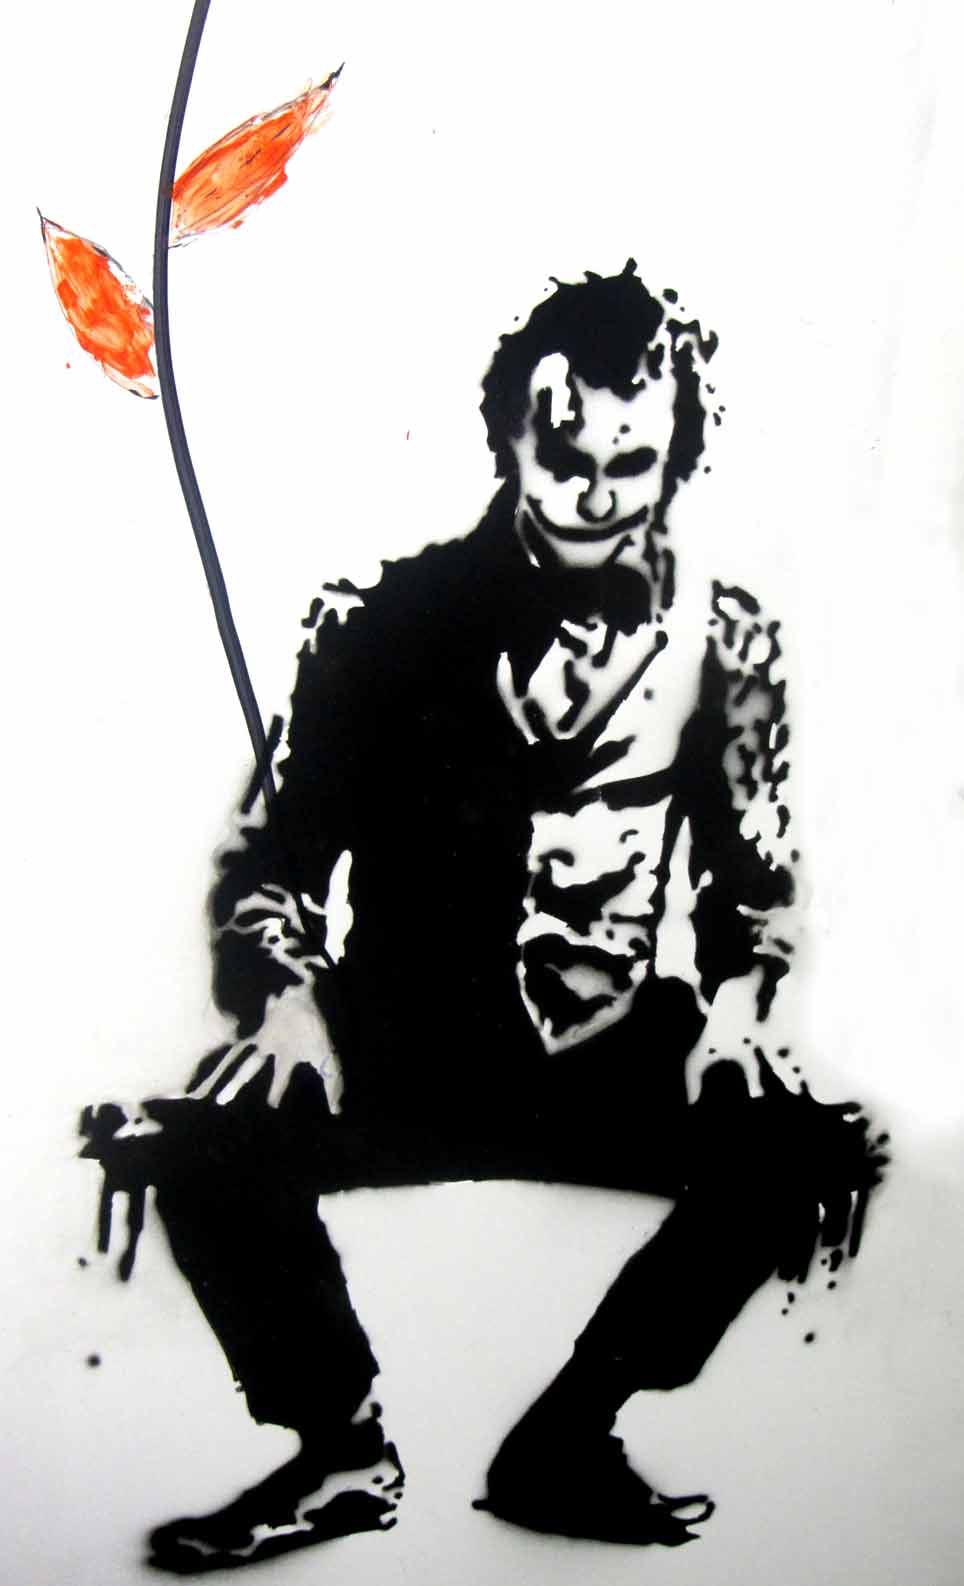 Joker Stencil Pictures Images Photos - Quoteko.